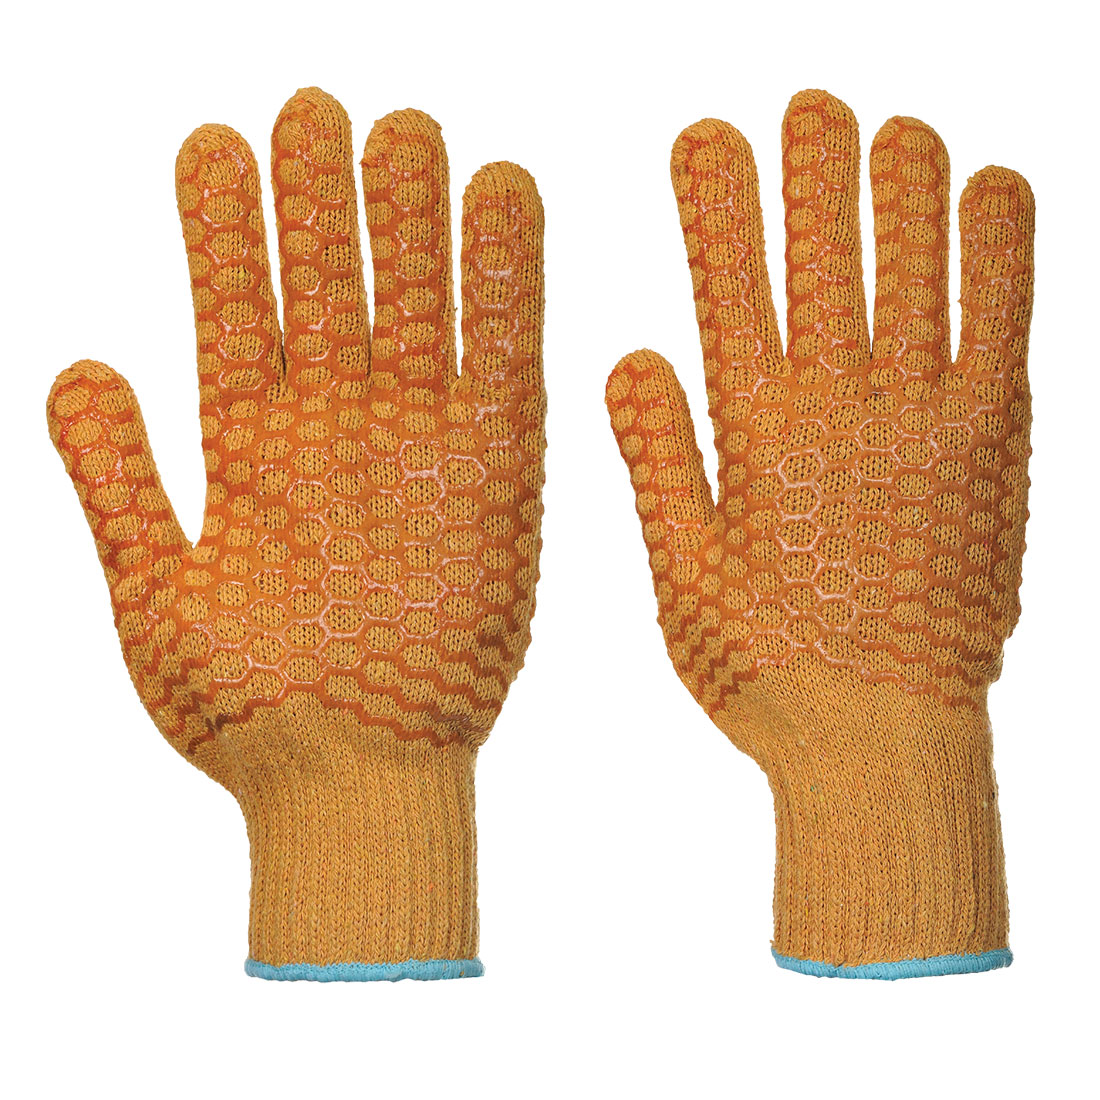 Criss Cross Glove, Orange - Size Large